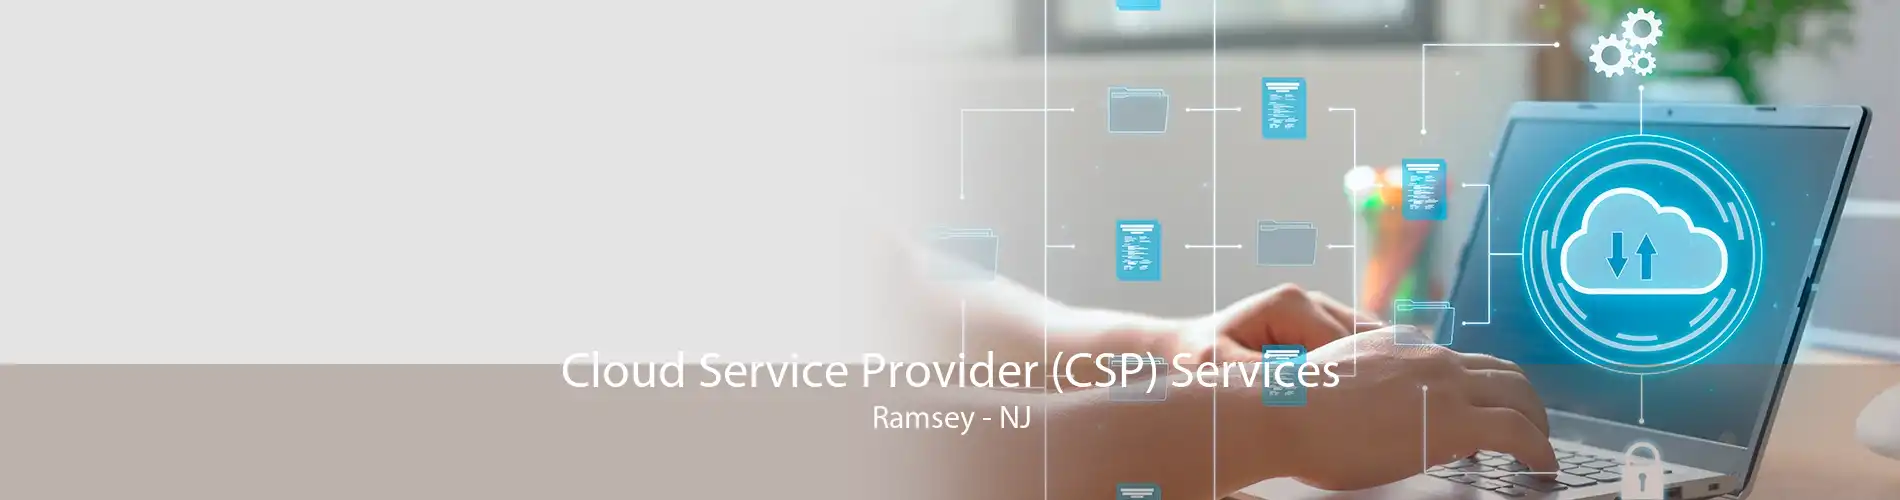 Cloud Service Provider (CSP) Services Ramsey - NJ